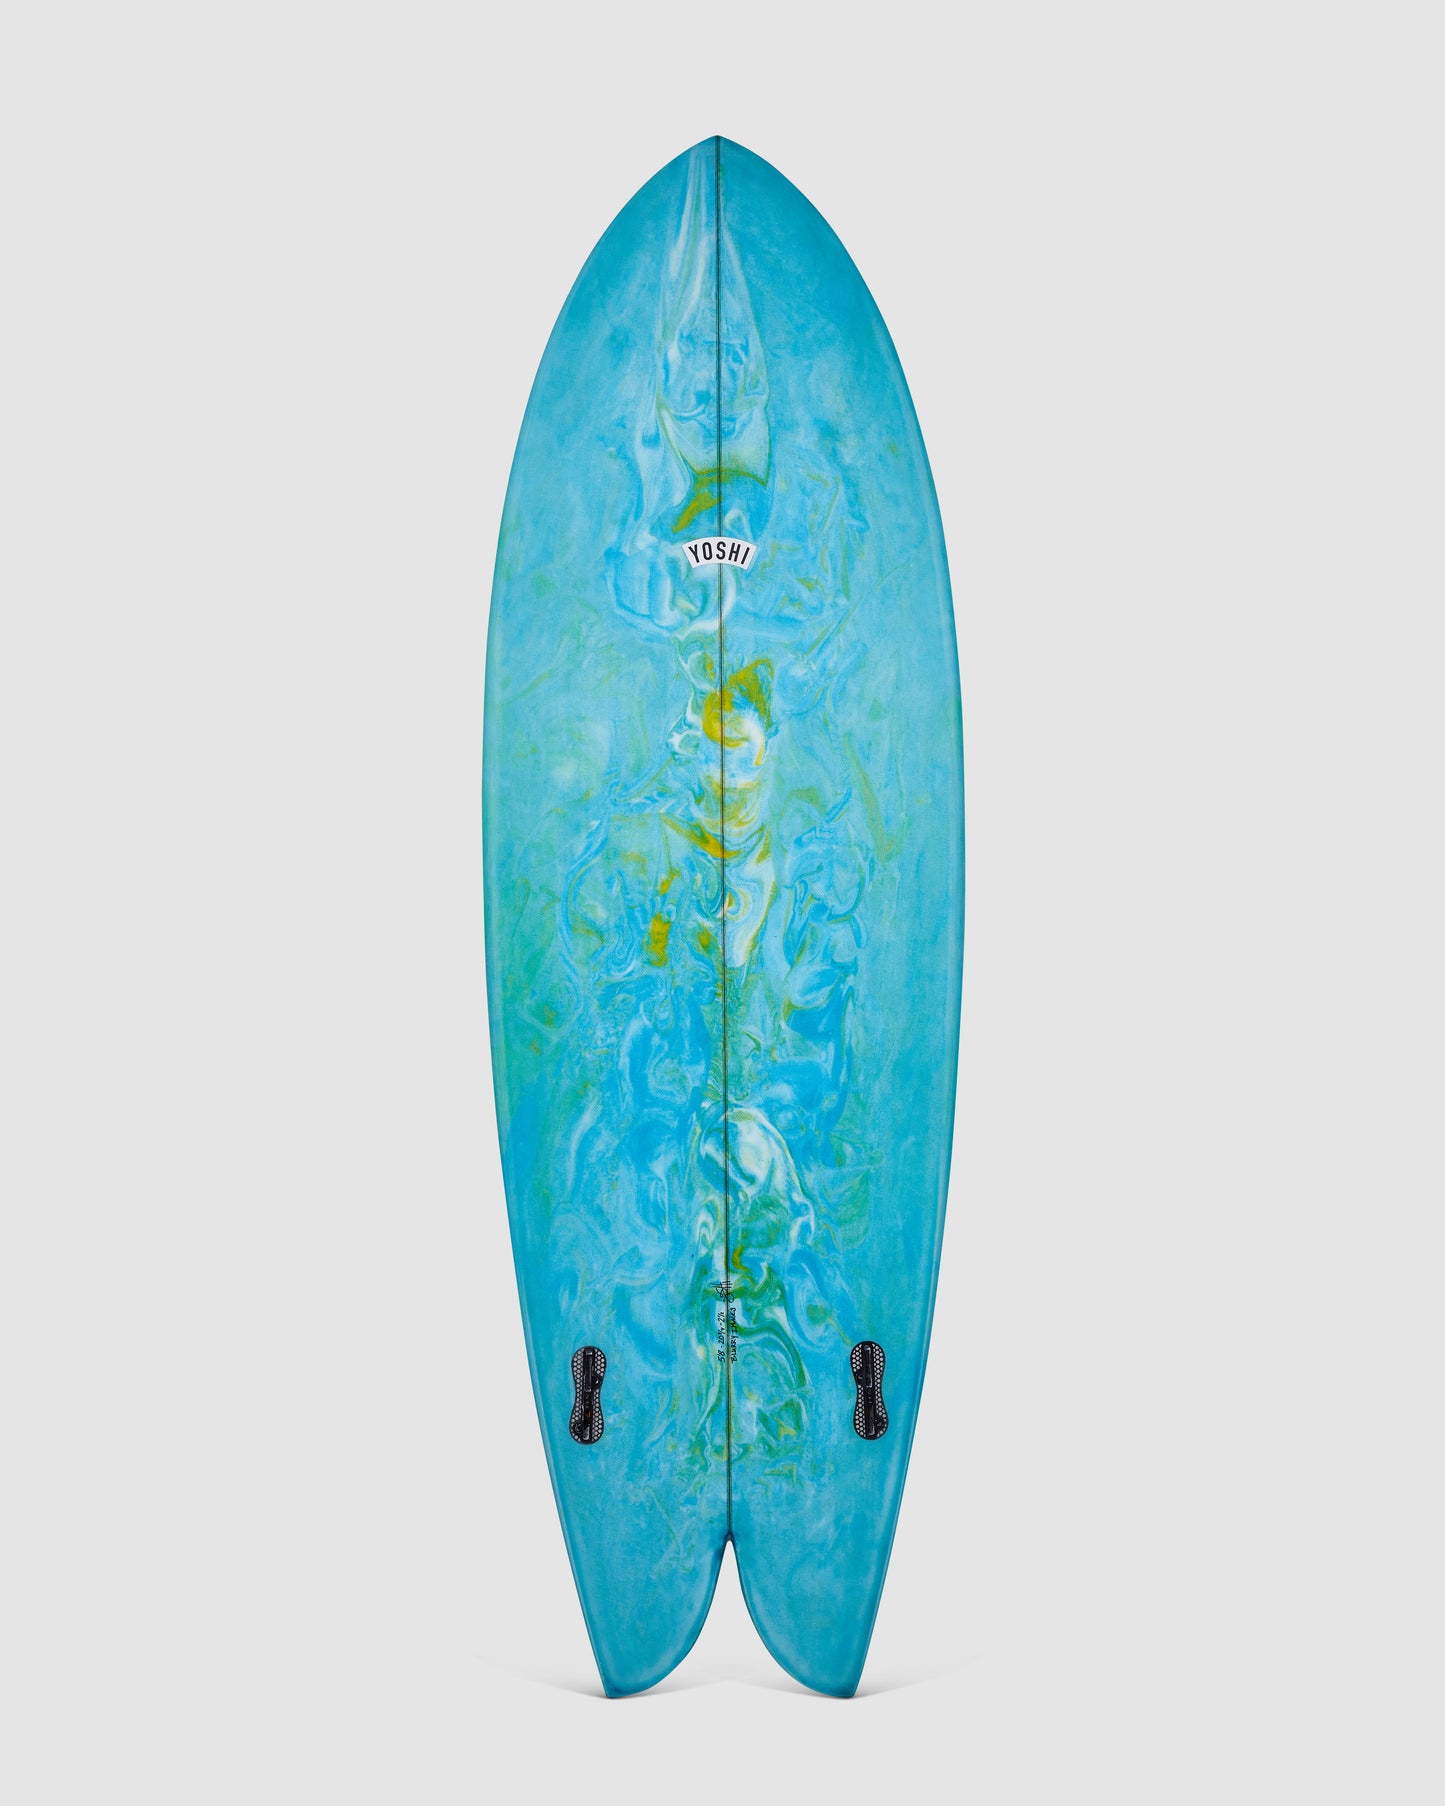 Blurry Retro Fish Surfboard